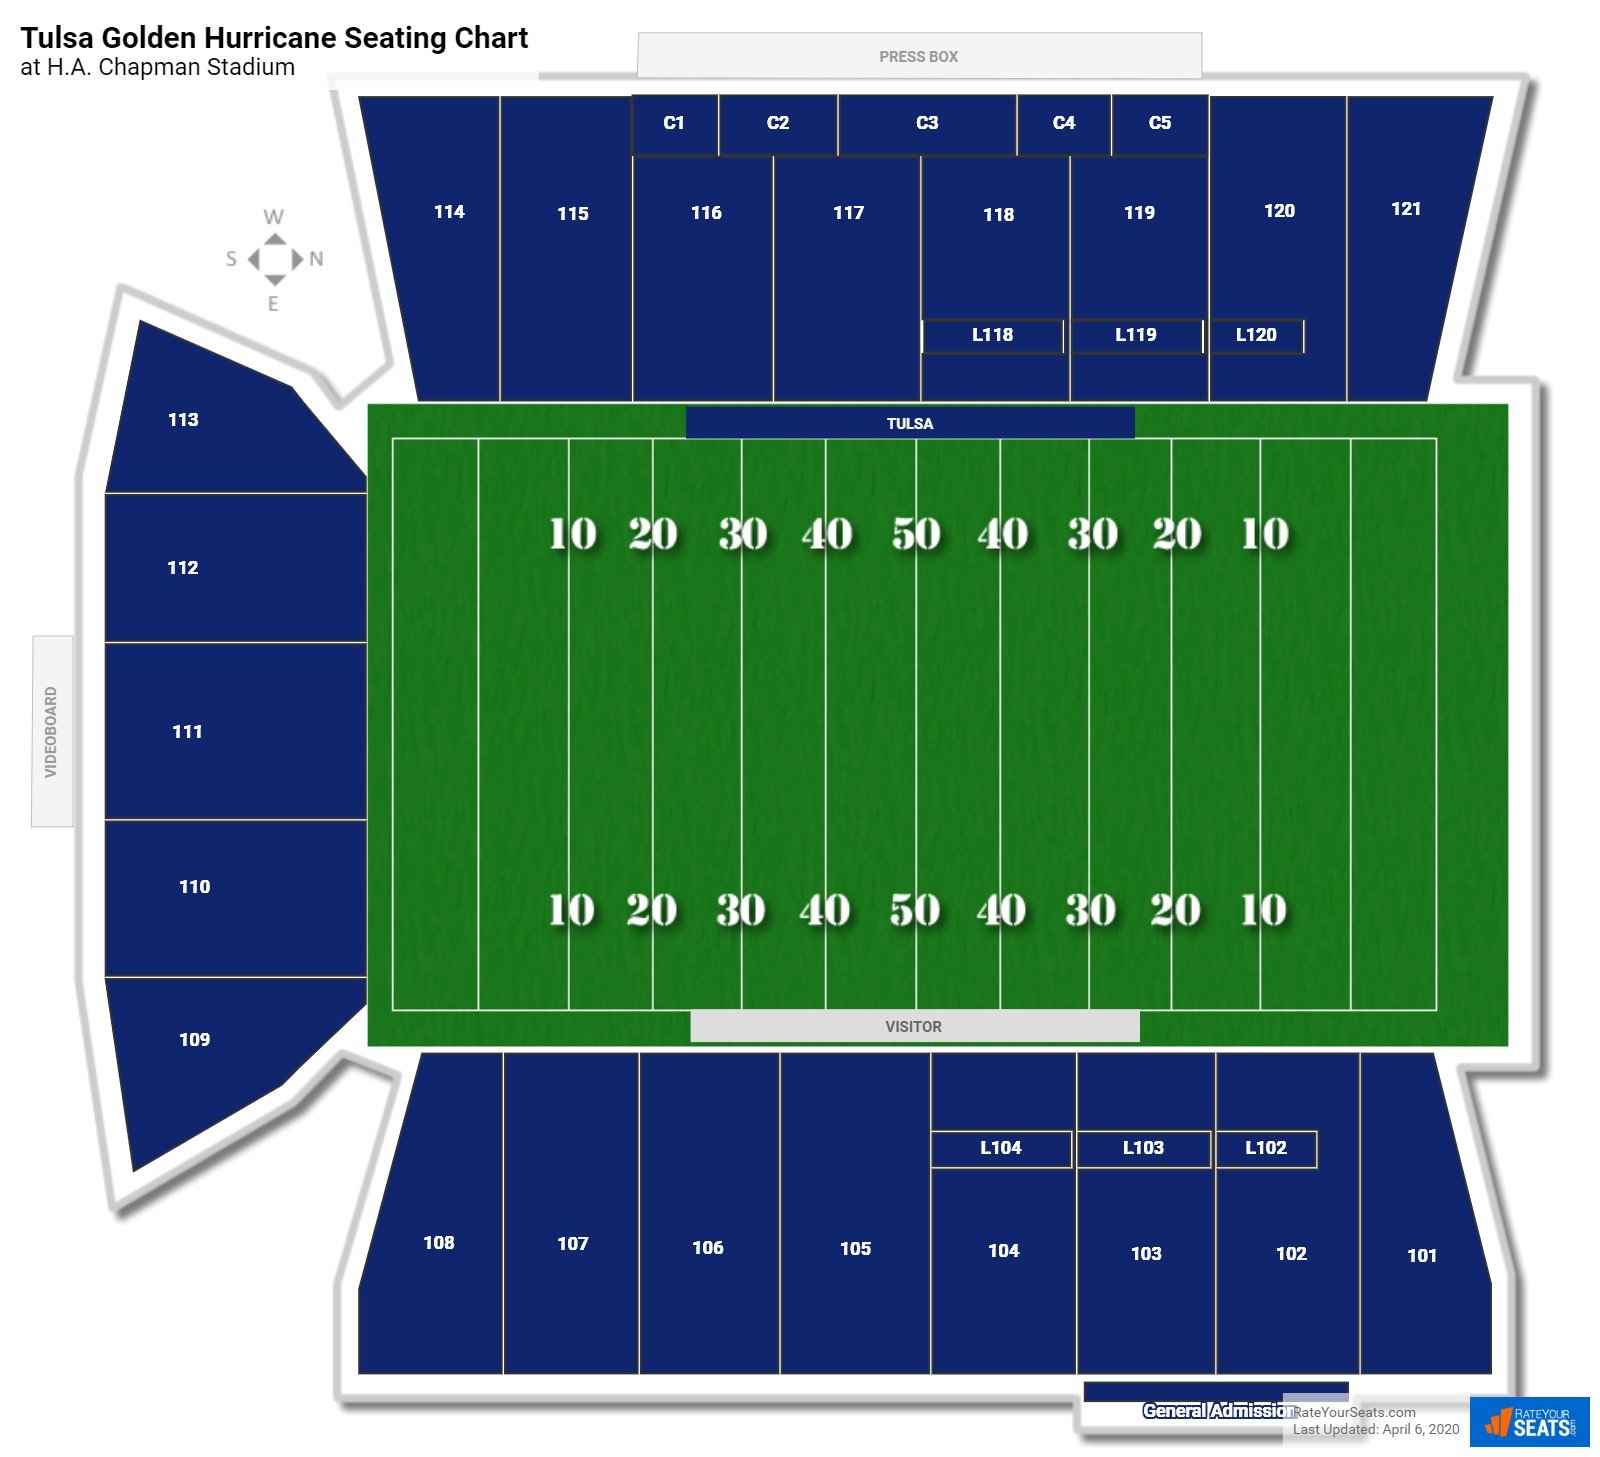 H.A. Chapman Stadium Seating Charts - RateYourSeats.com